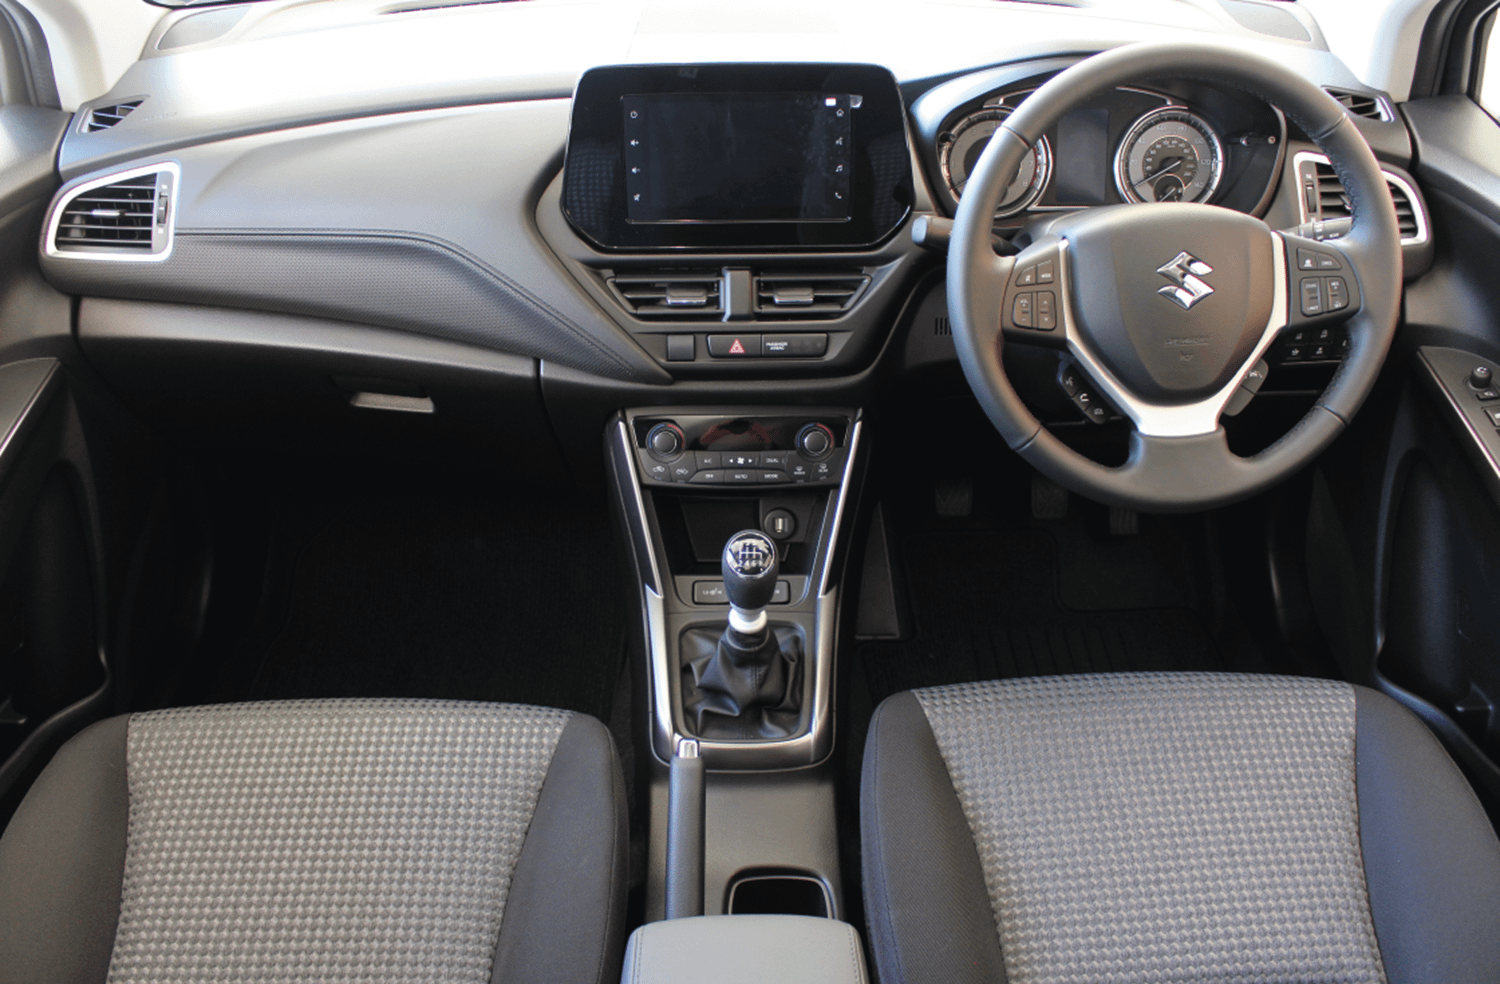 Suzuki S-Cross Interior